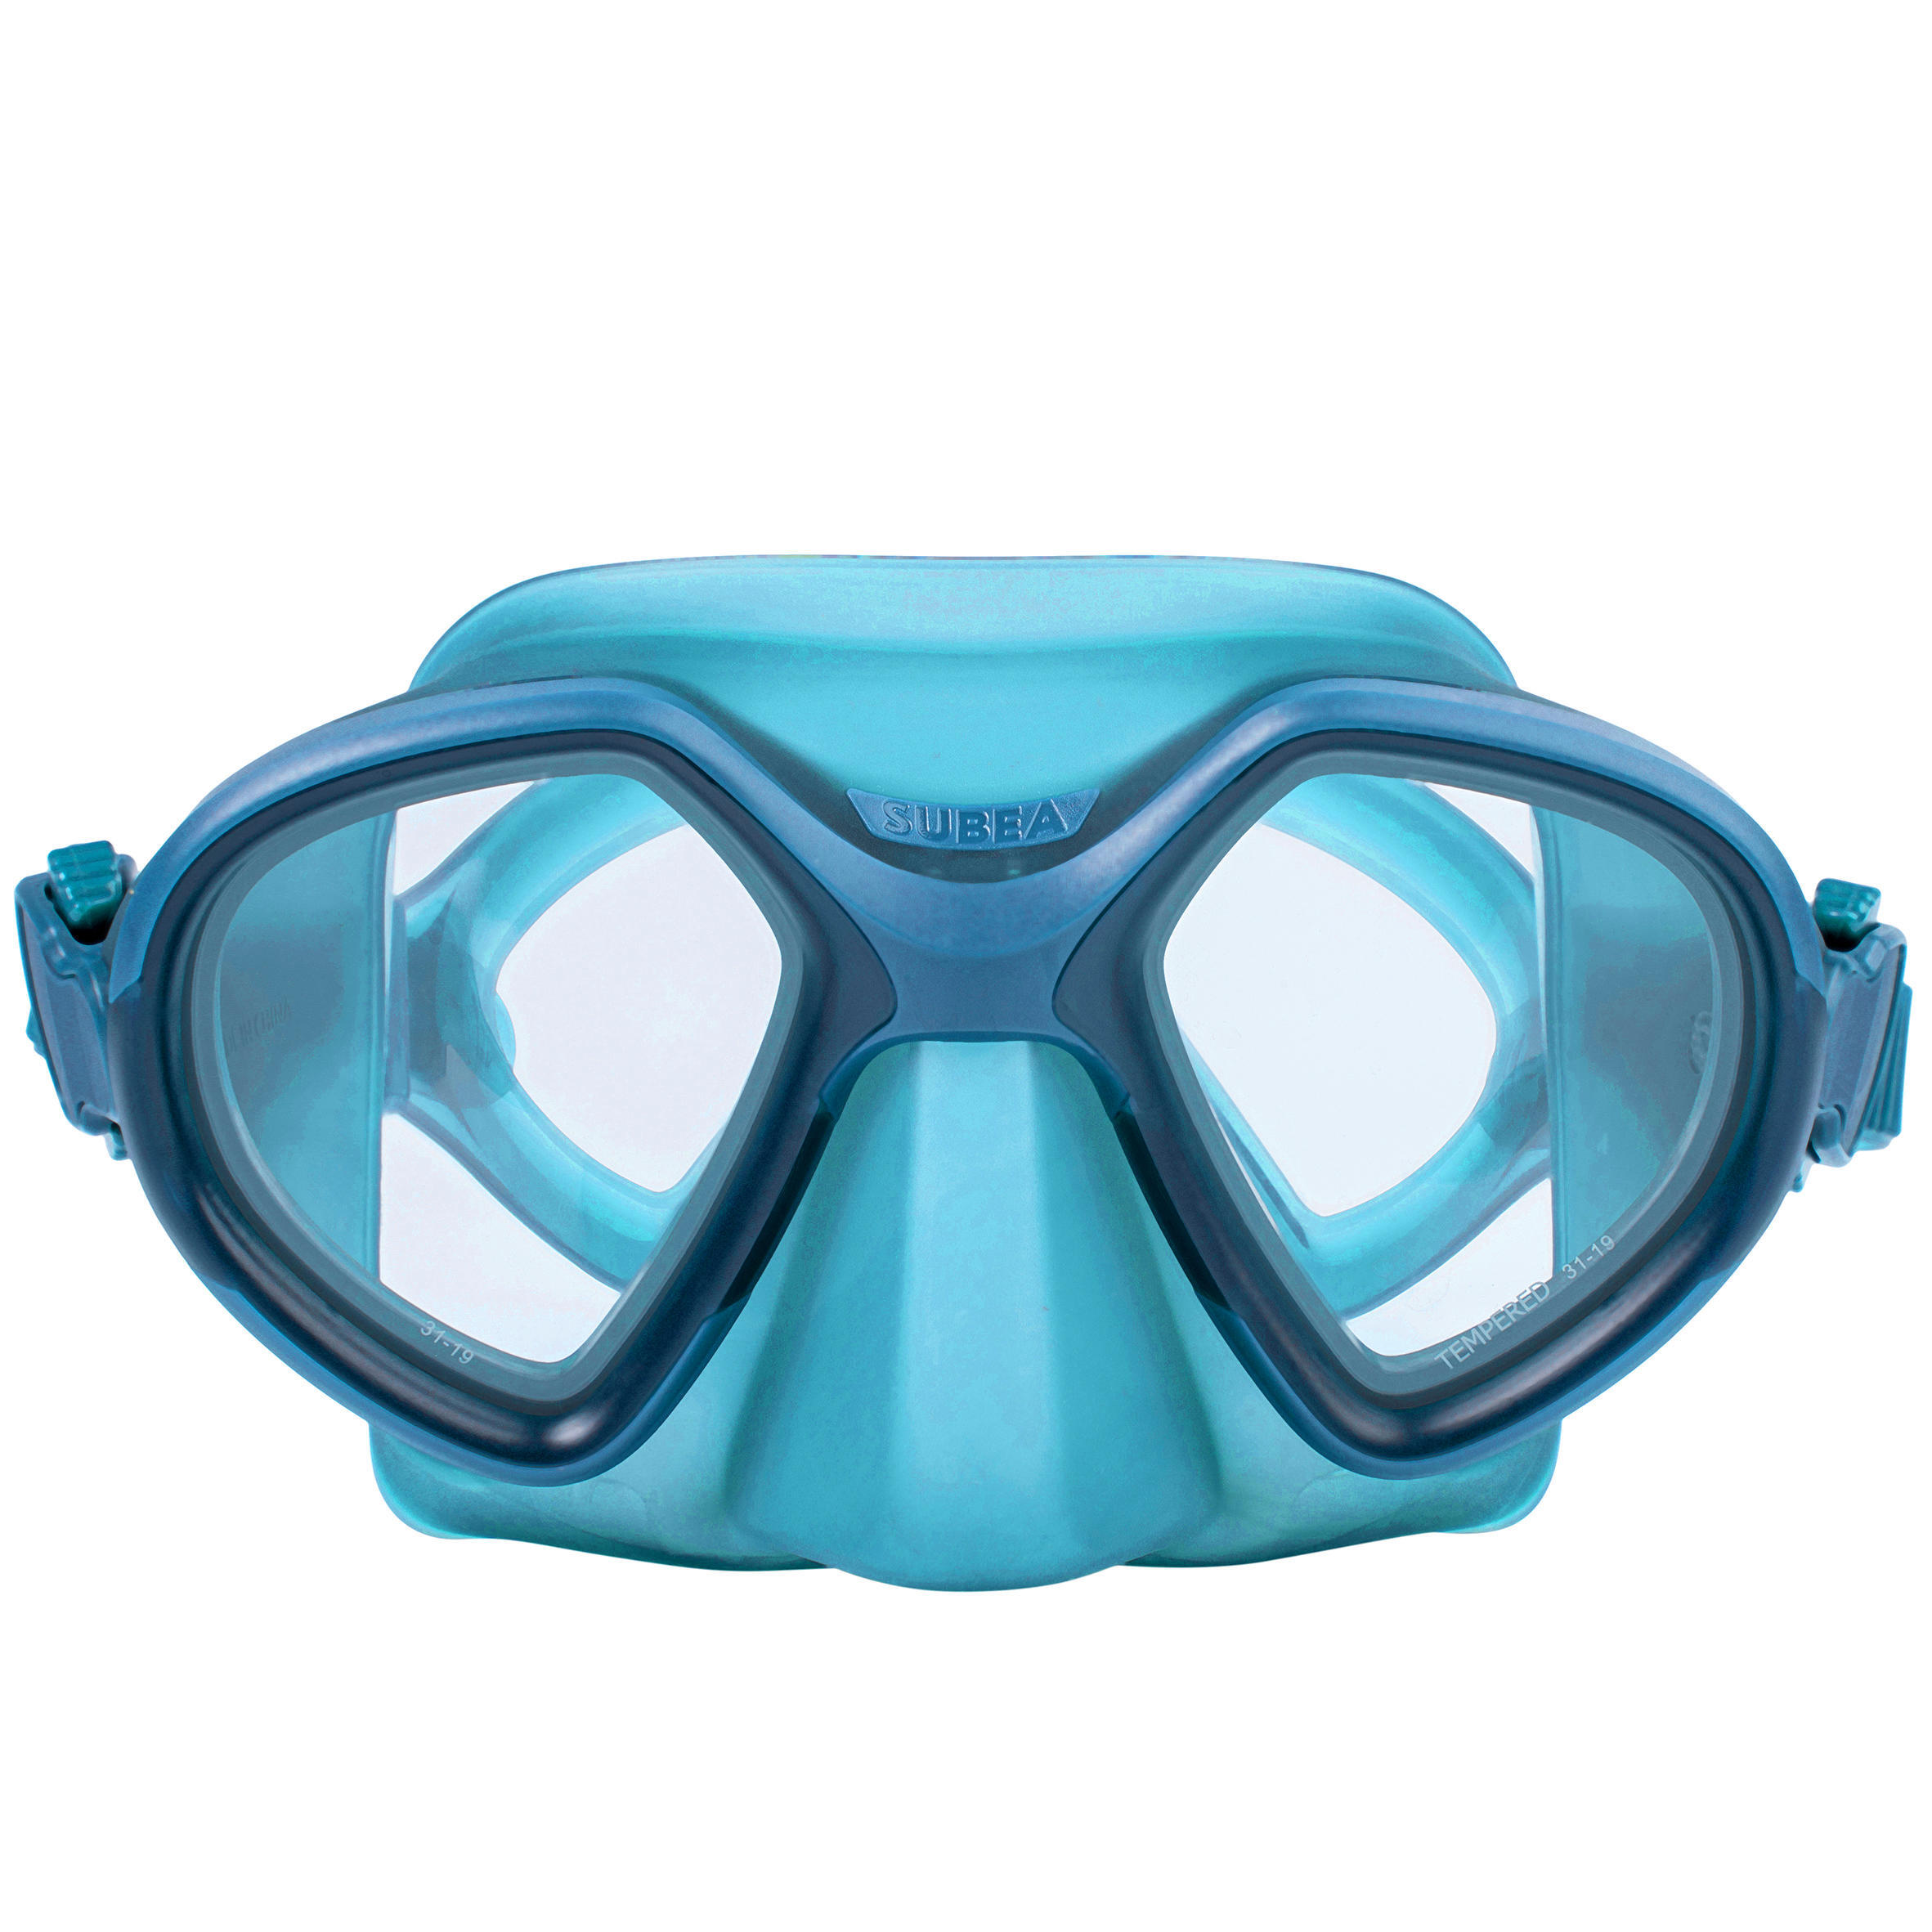 Freediving mask small volume - 500 dual petrol blue 2/8